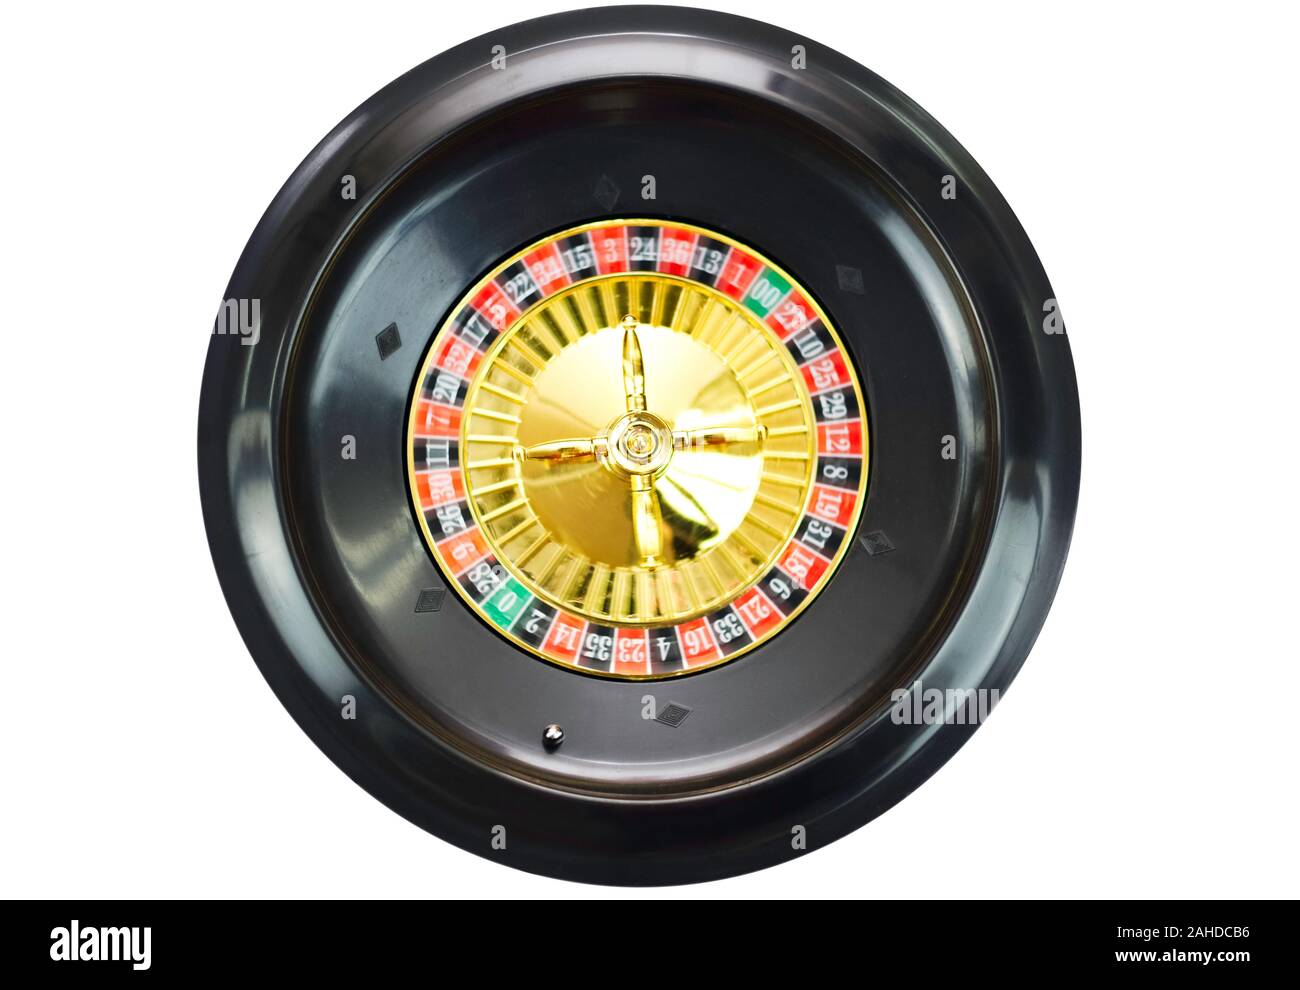 ROULETTE WHEEL MINIATURE CASINO COLLECTIBLE GAMBLING MINI CLOCK - SPINS!